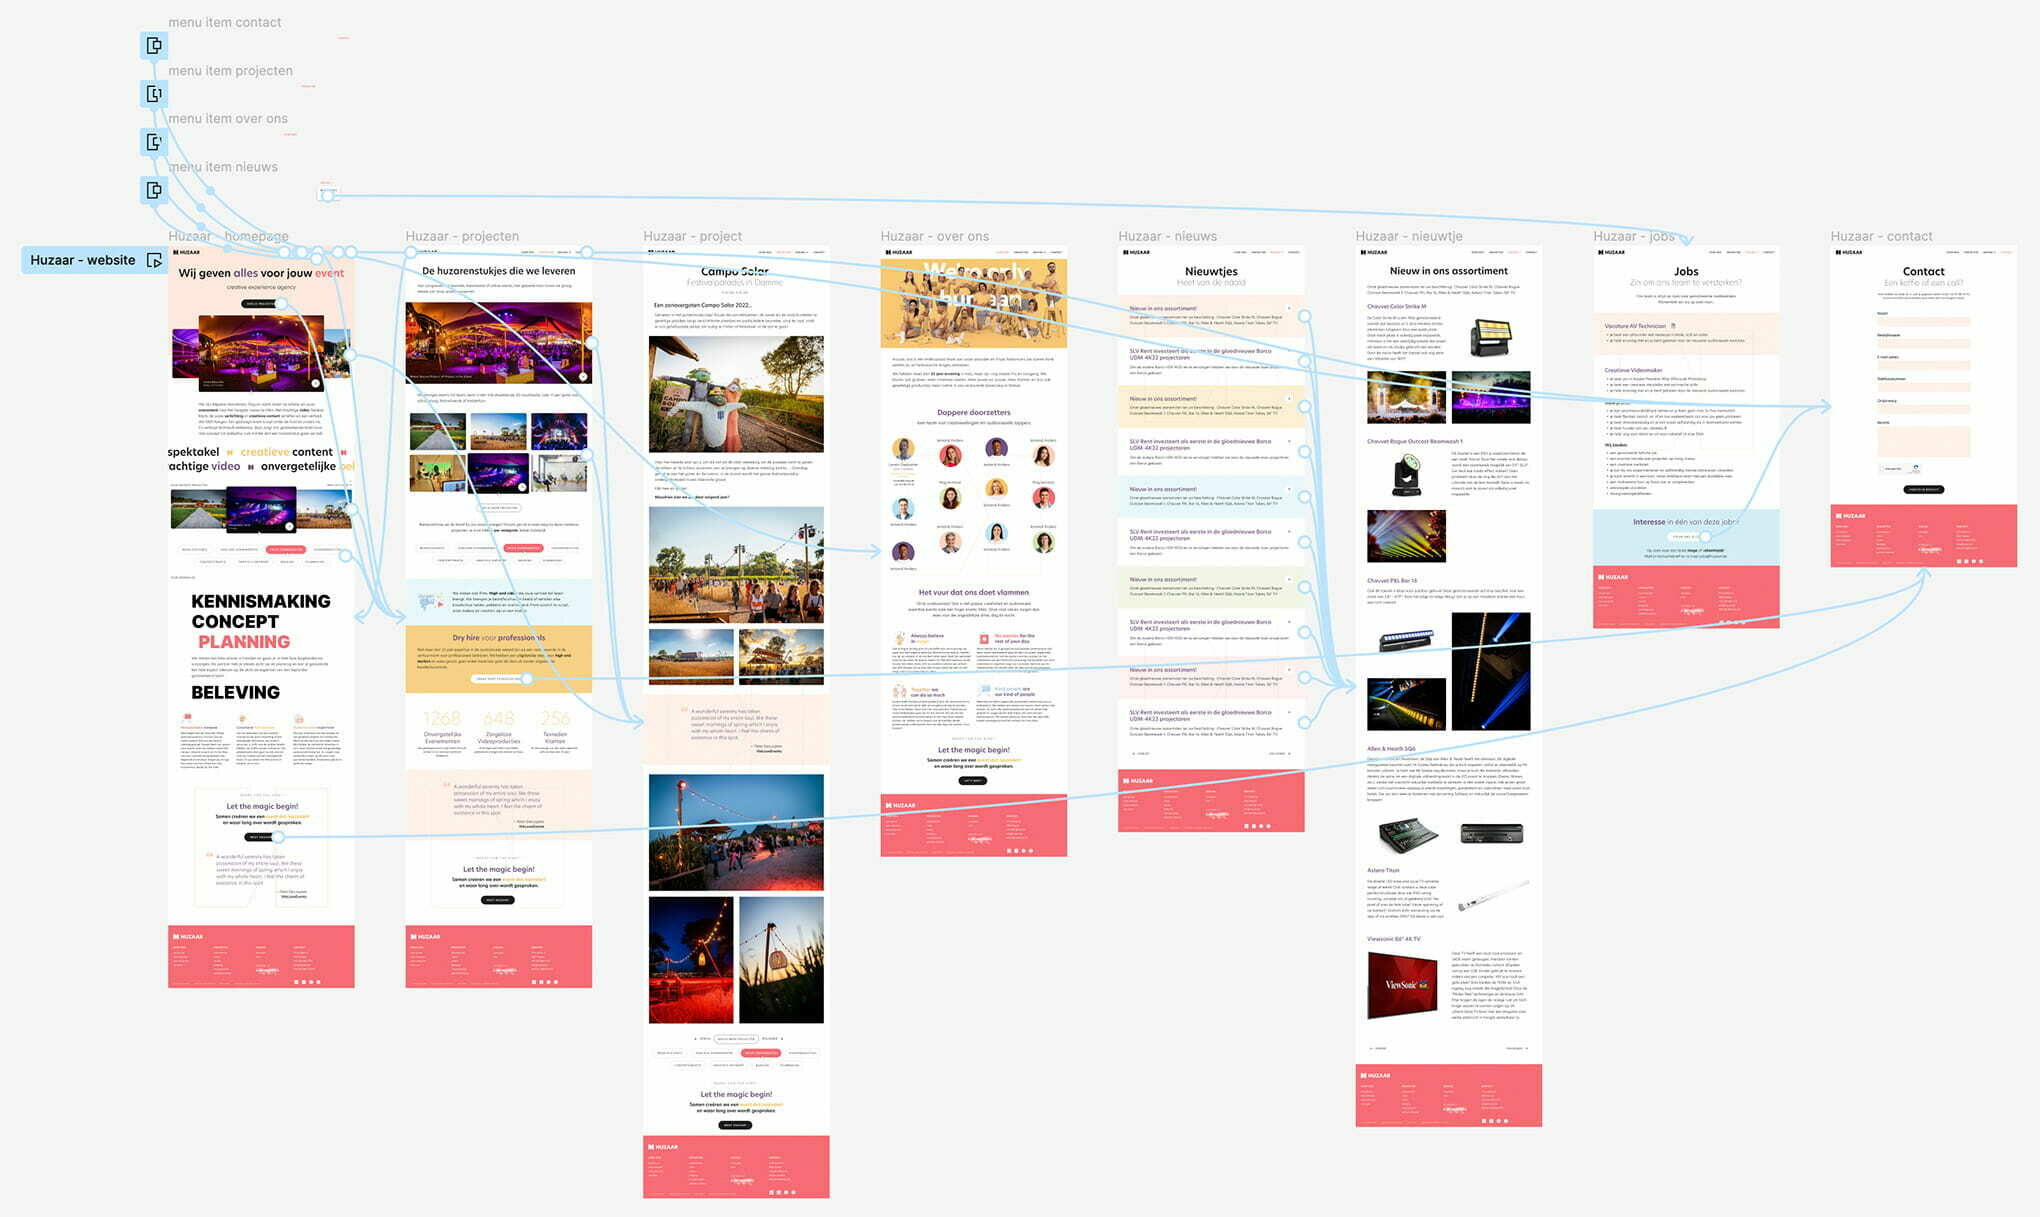 Huzaar website design in Figma, showing the page designs in prototype view